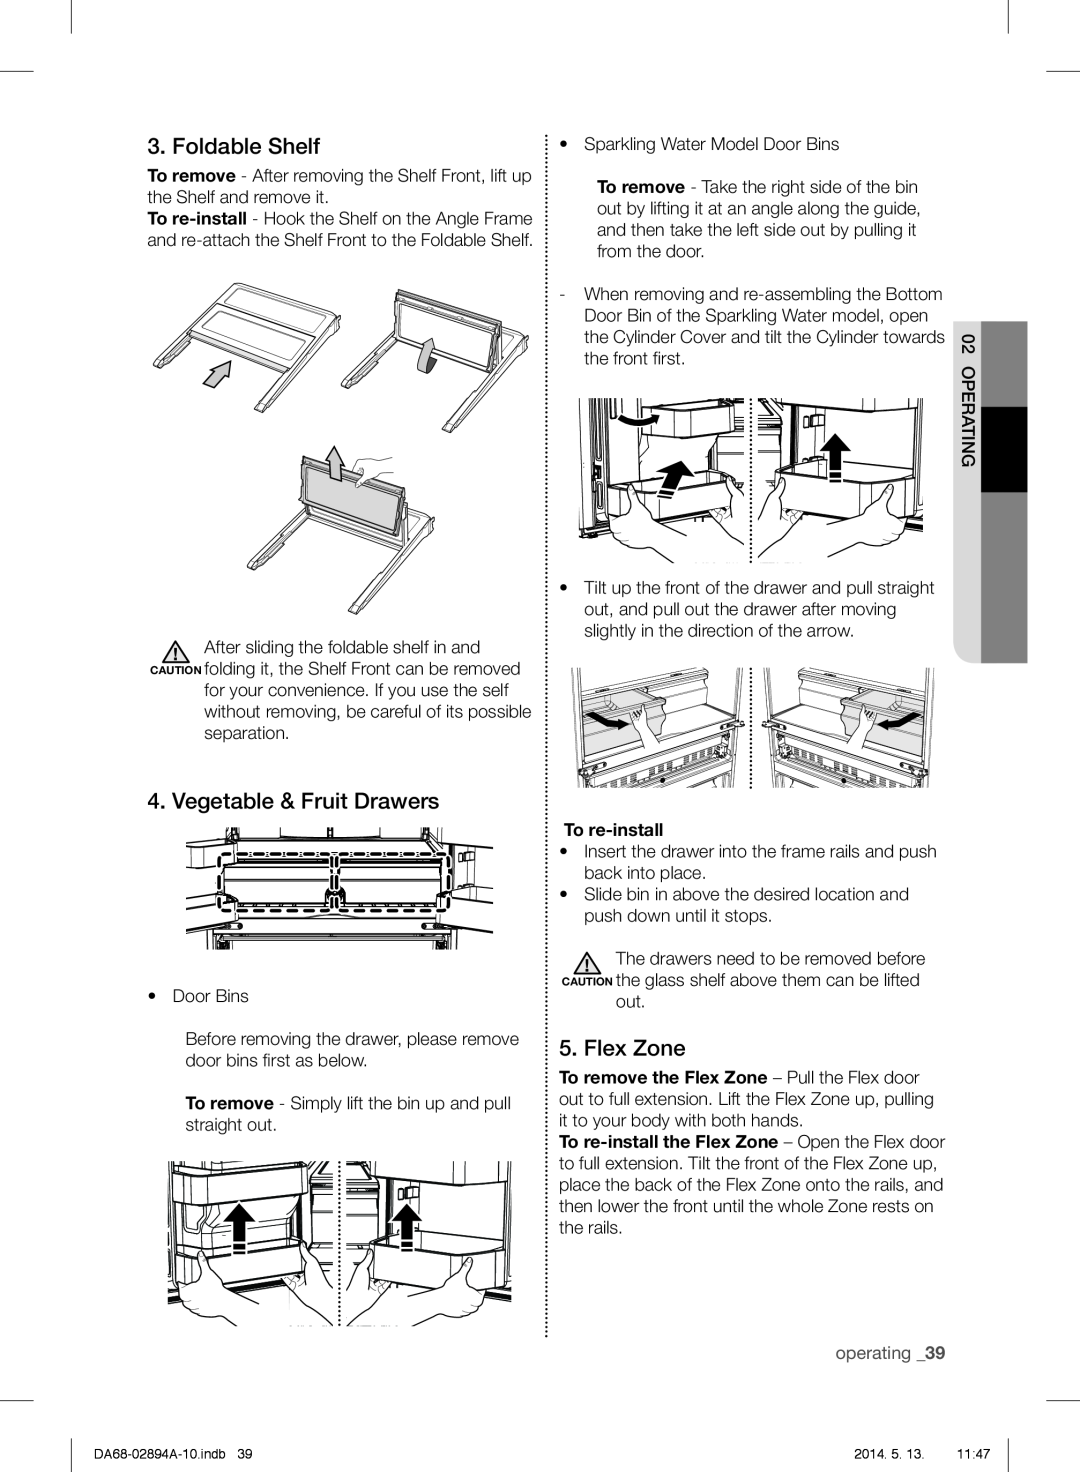 Samsung RF31FMESBSR user manual Foldable Shelf, Vegetable & Fruit Drawers, Flex Zone, operating _39 